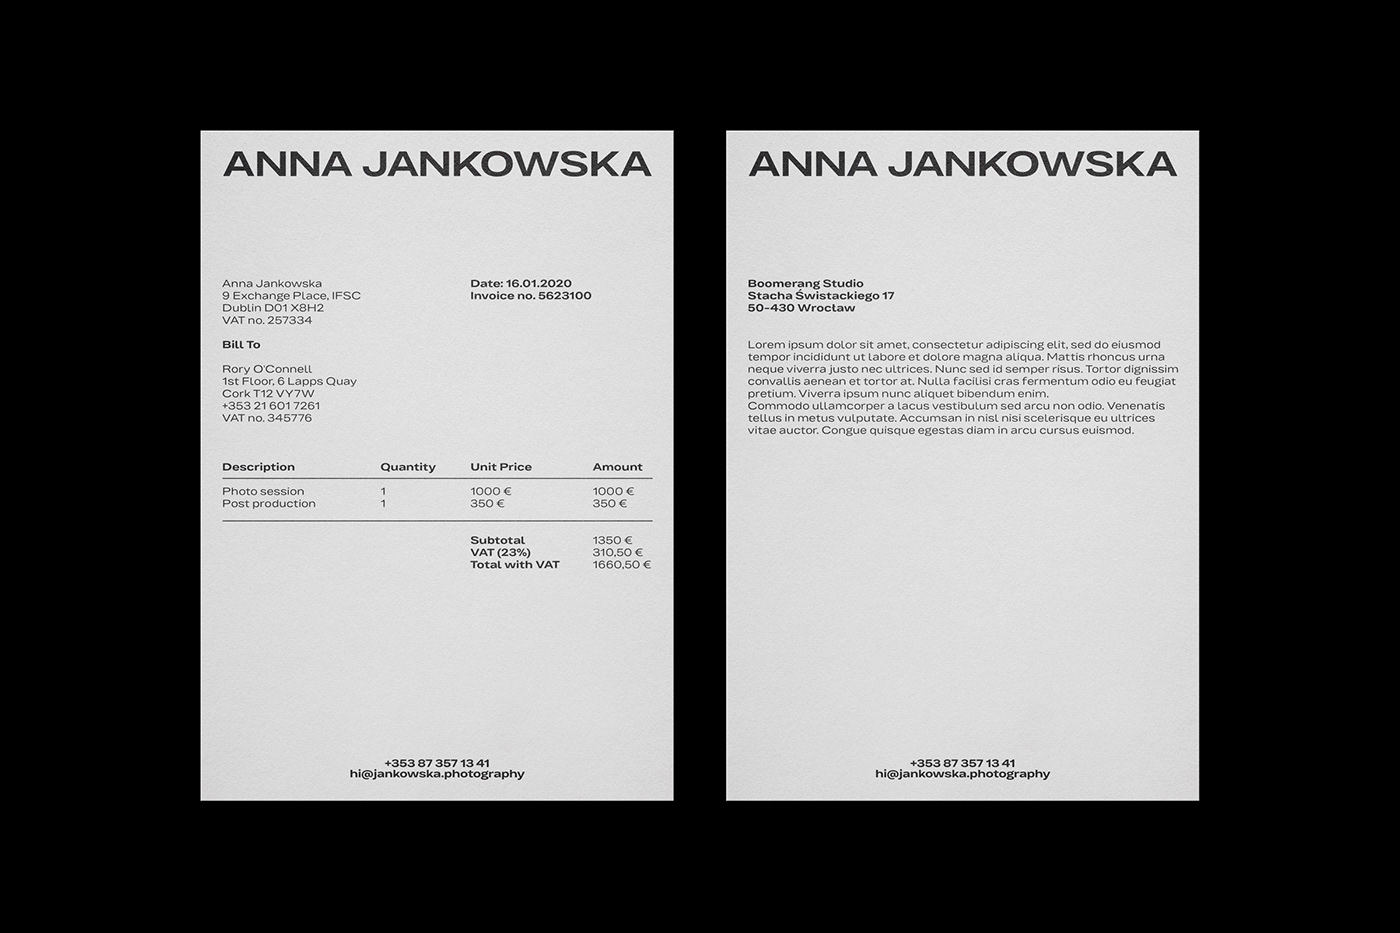 identity Logotype www graphic design  anna jankowska   Photography  Website Stationery brand